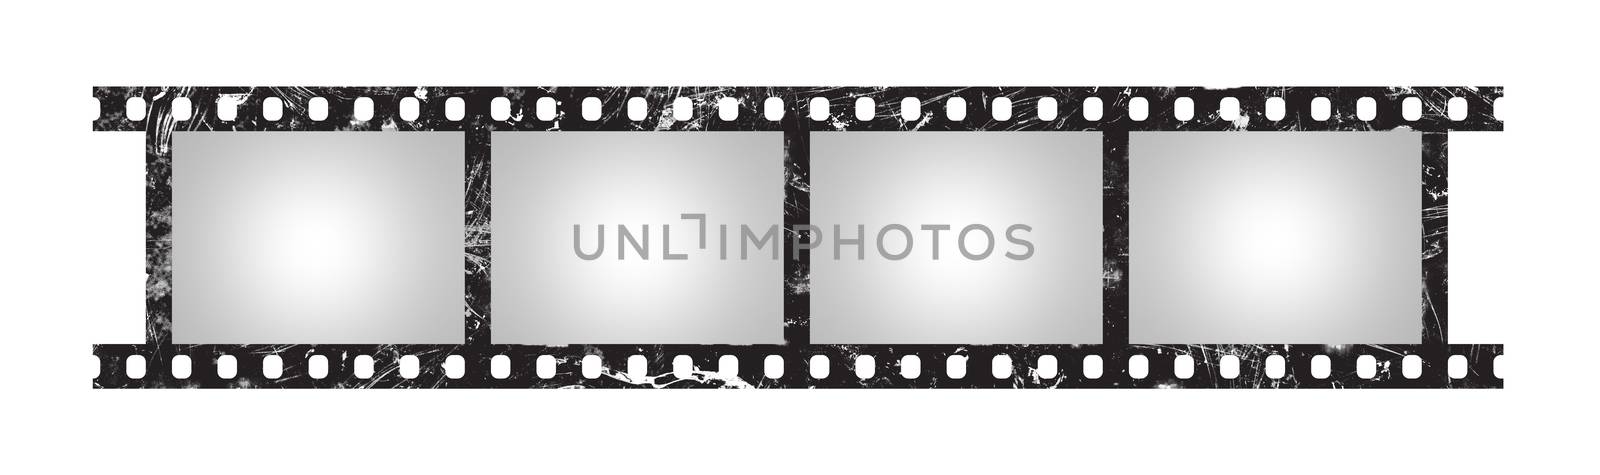 Six empty retro frames of 35 mm film strip by BreakingTheWalls